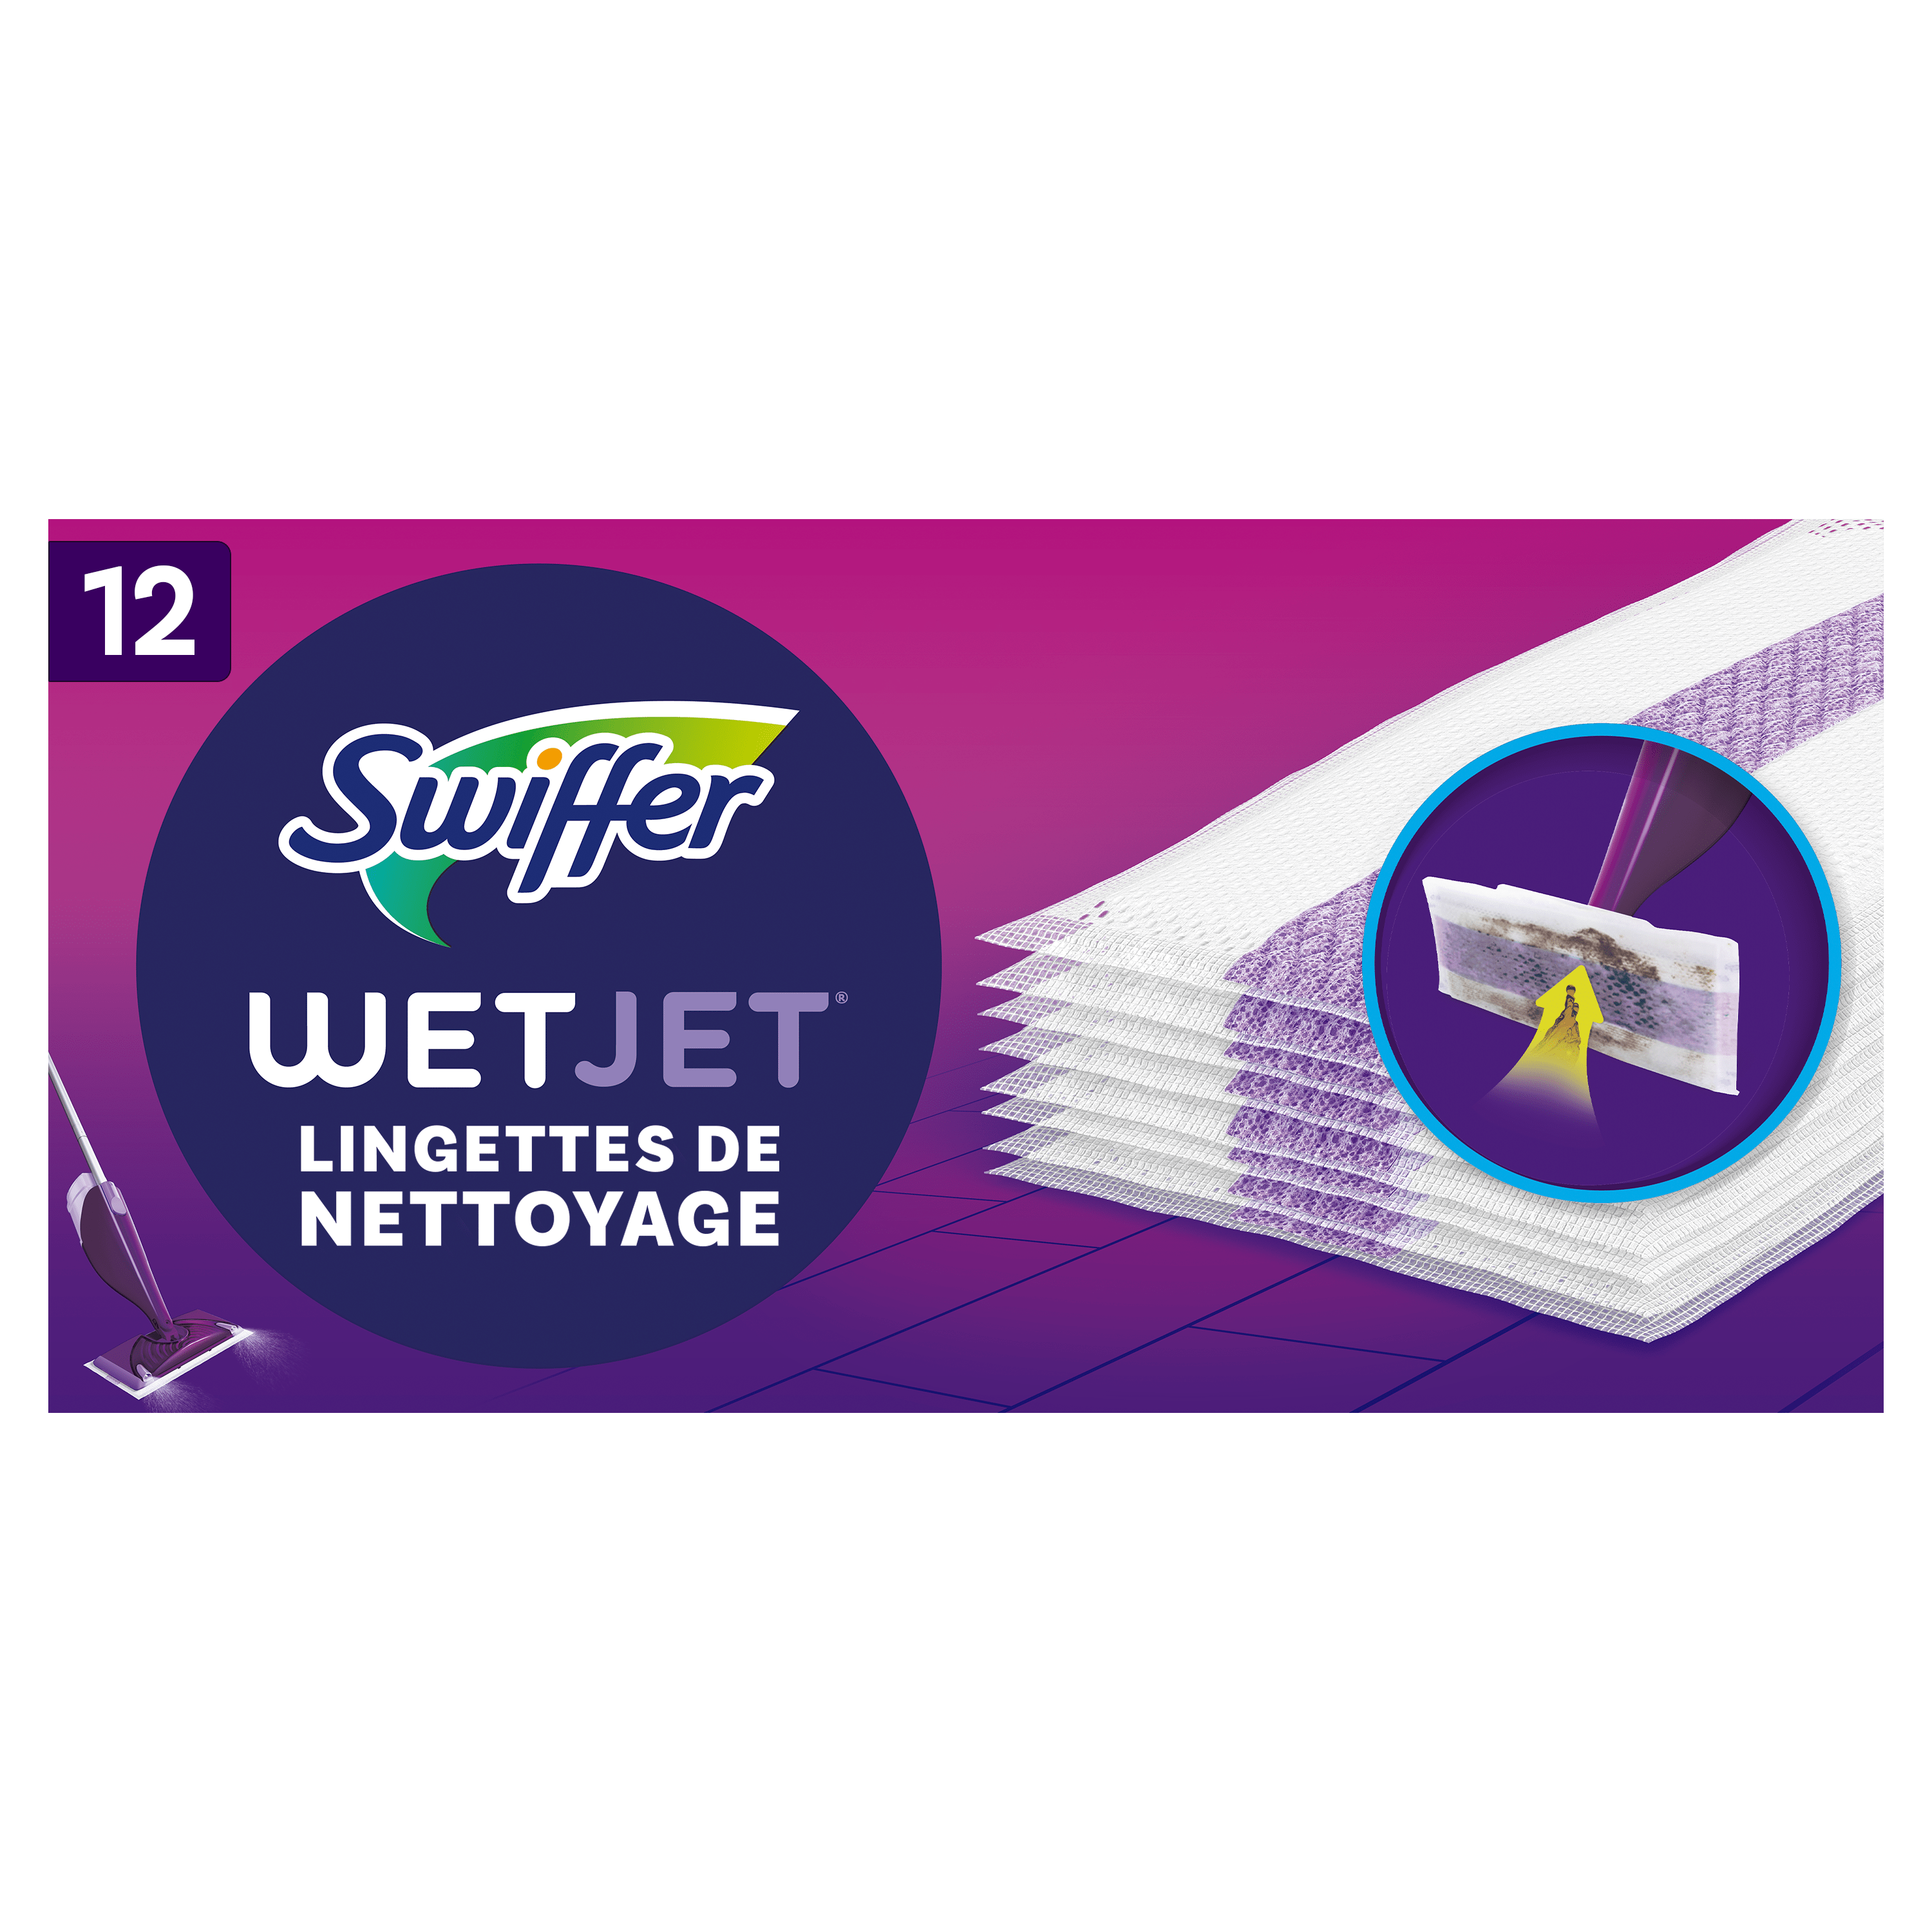 Swiffer Mega Pack 80 Anti Staub Seviette Chiffons de Plancher Nettoyage